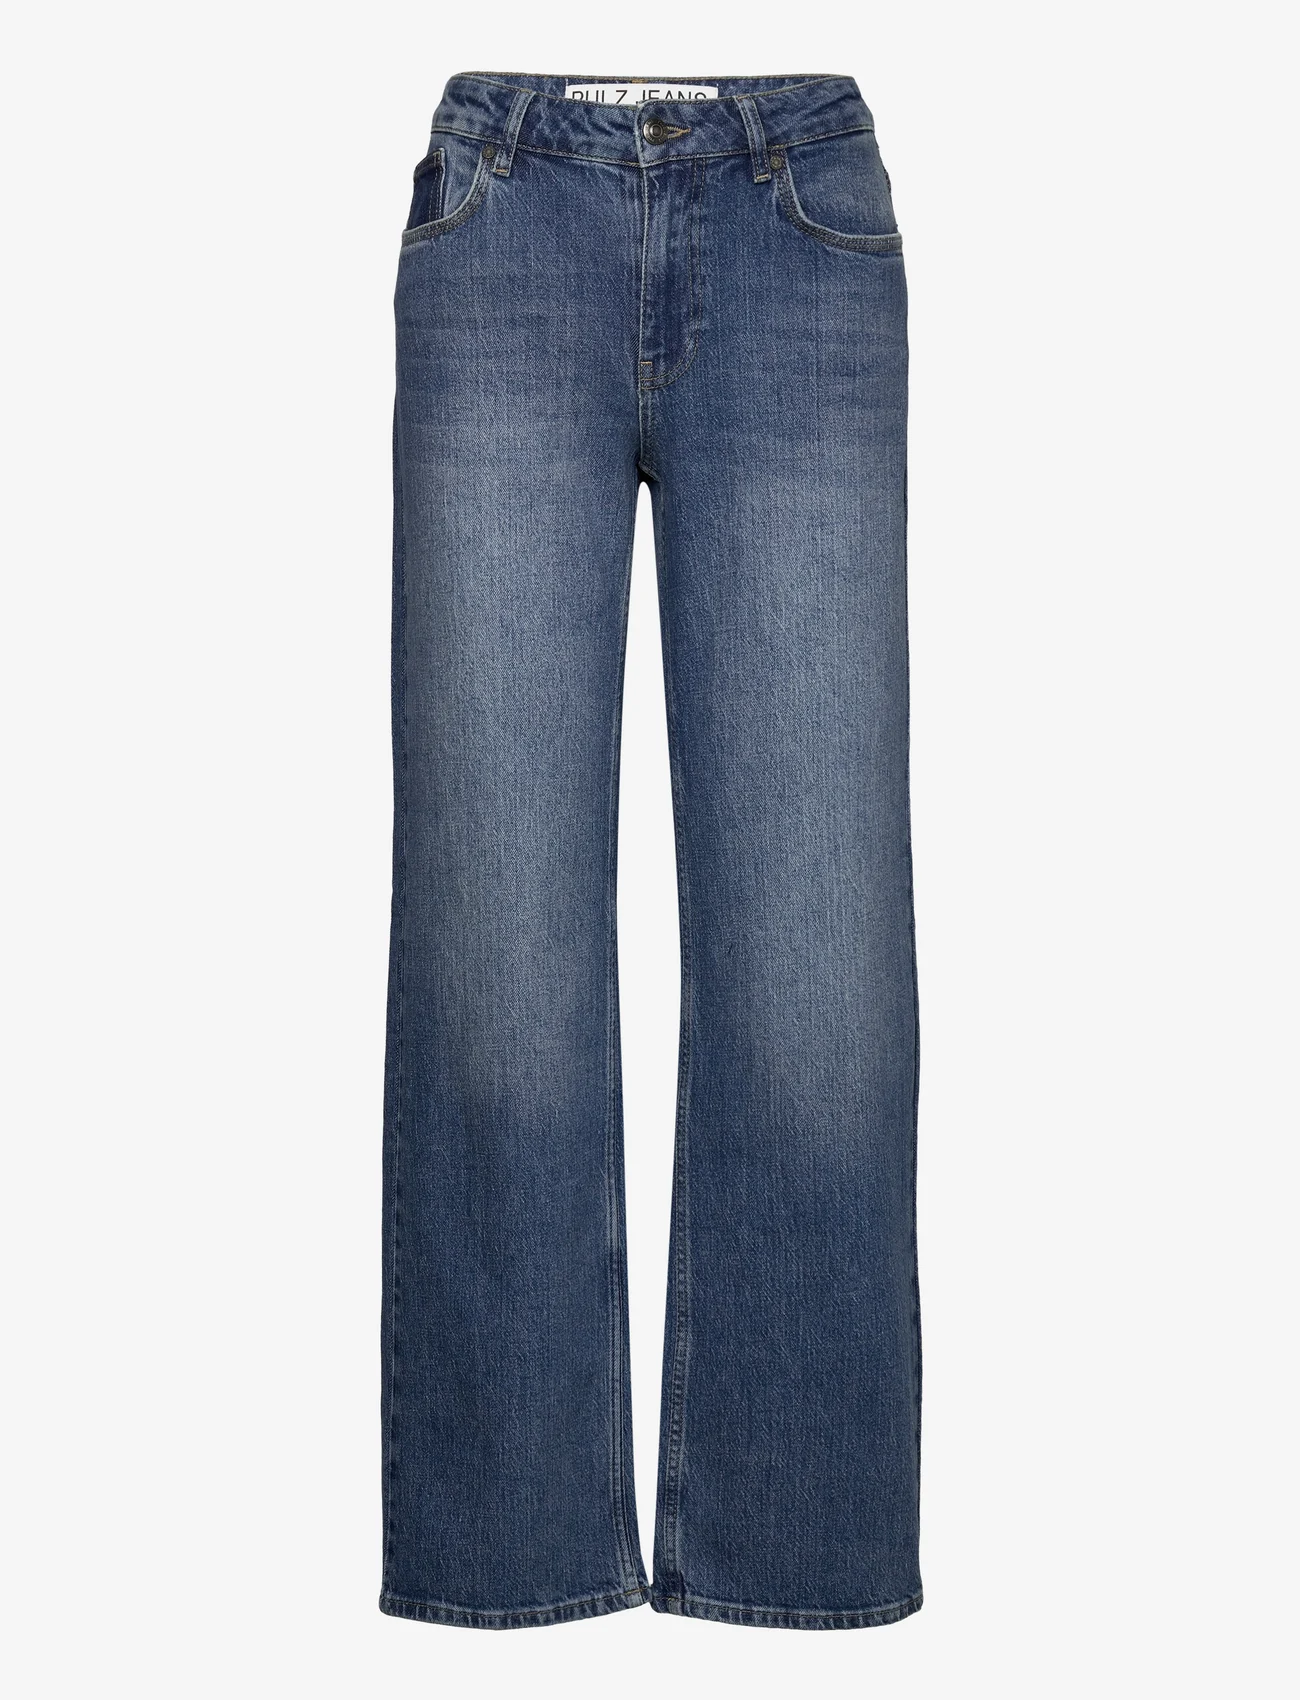 Pulz Jeans - PZVEGA HW Jeans Wide Leg - brede jeans - medium blue denim - 0